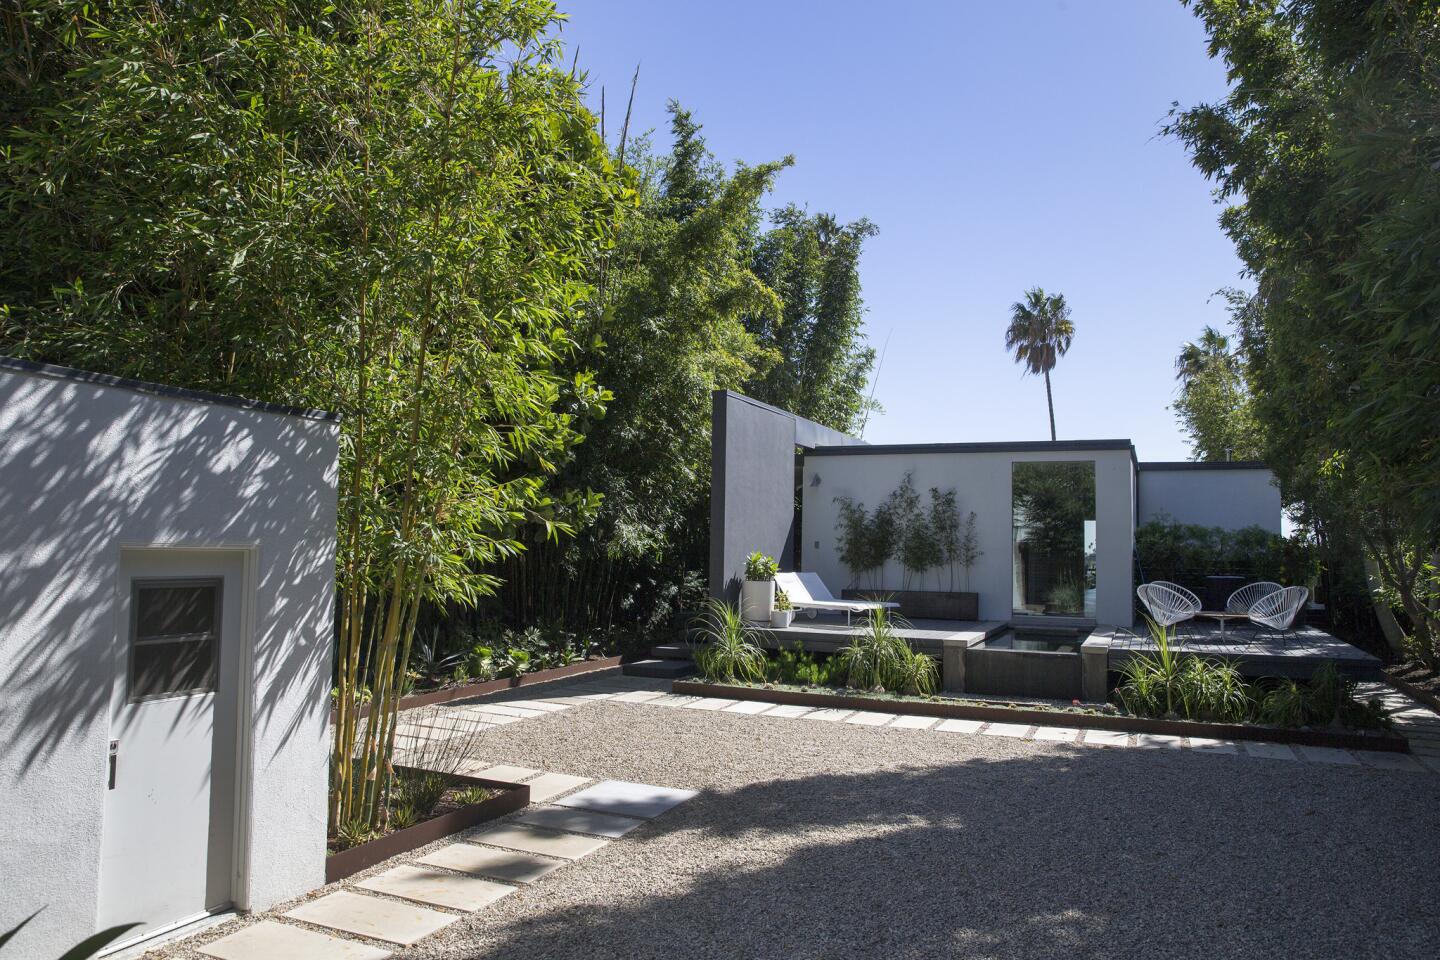 An Edward Killingsworth-designed house in Long Beach